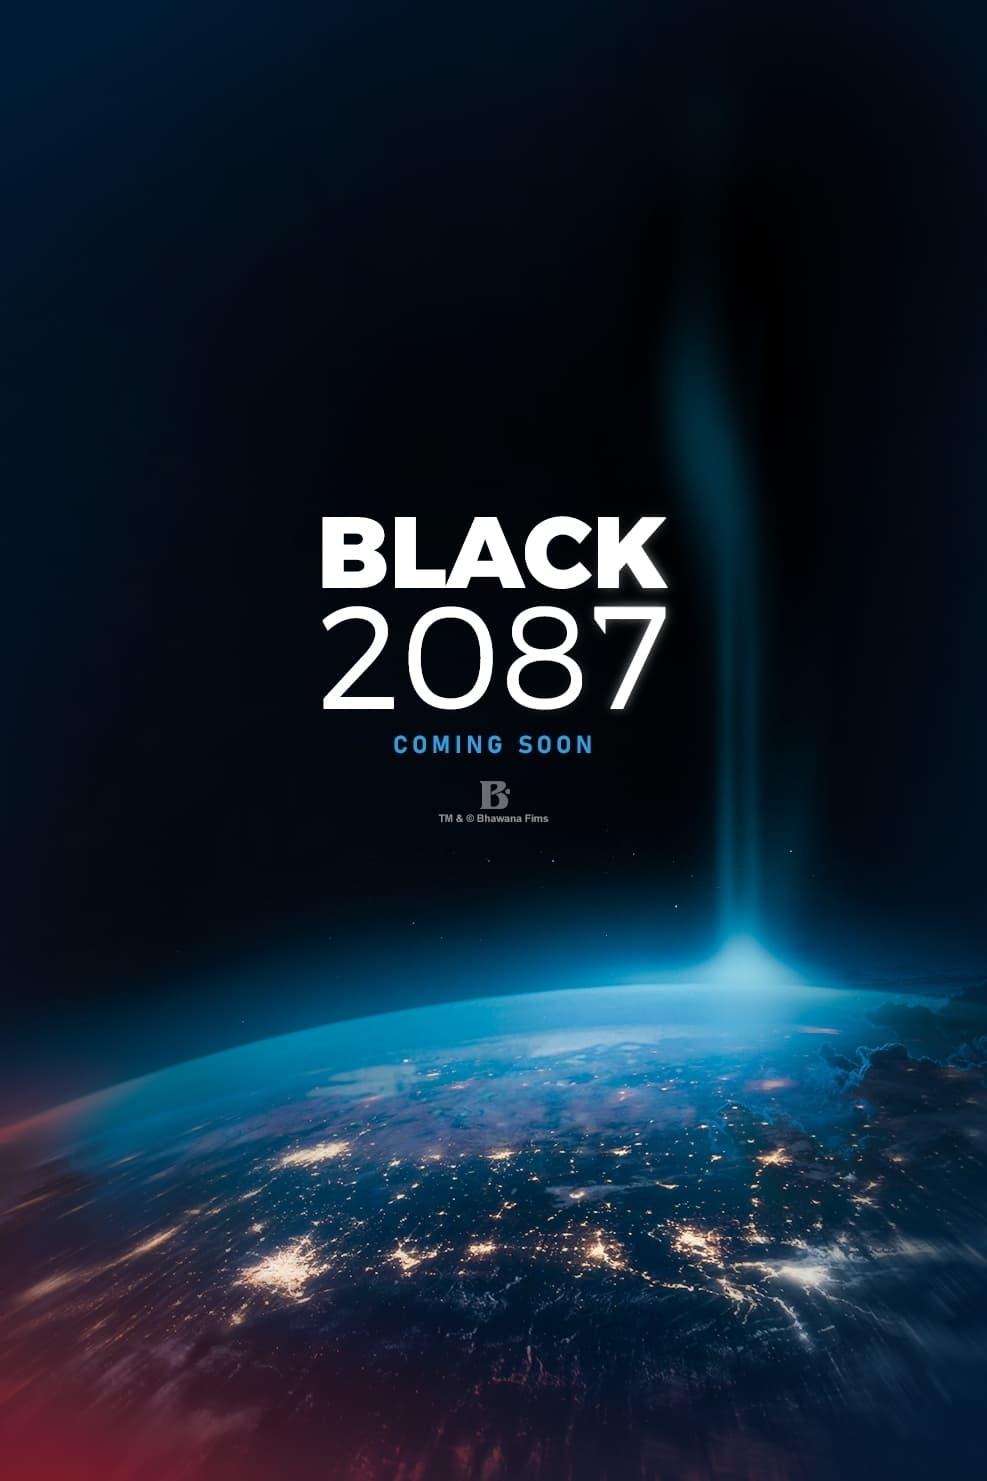 Black 2087 poster